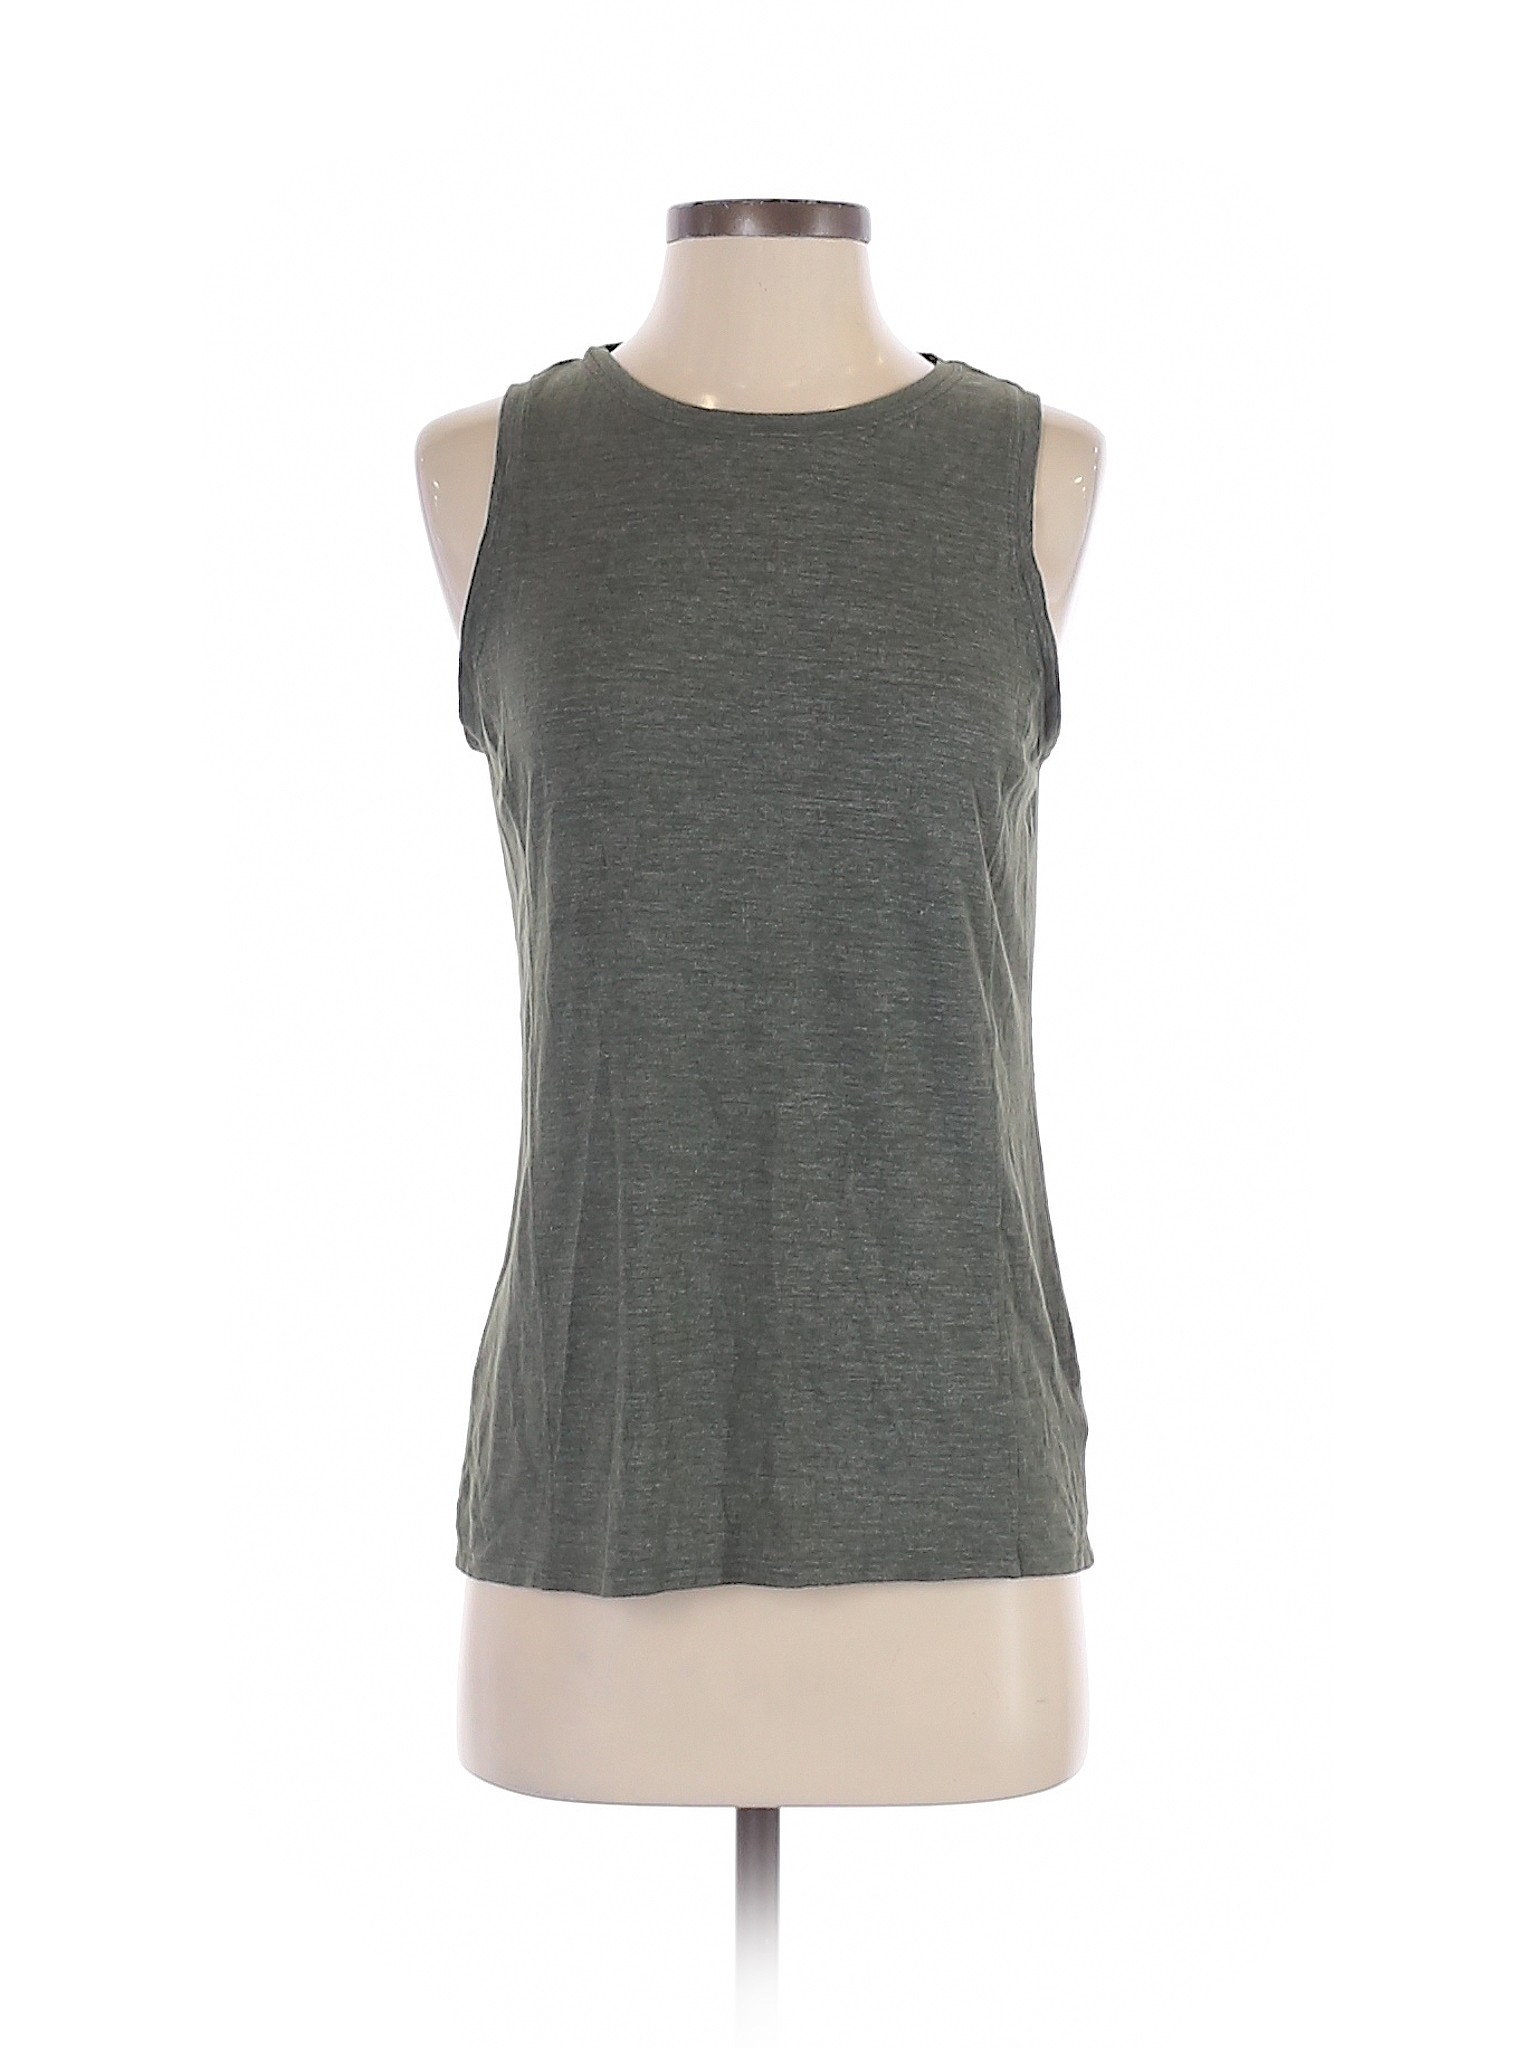 Athleta Women Gray Sleeveless T-Shirt S | eBay